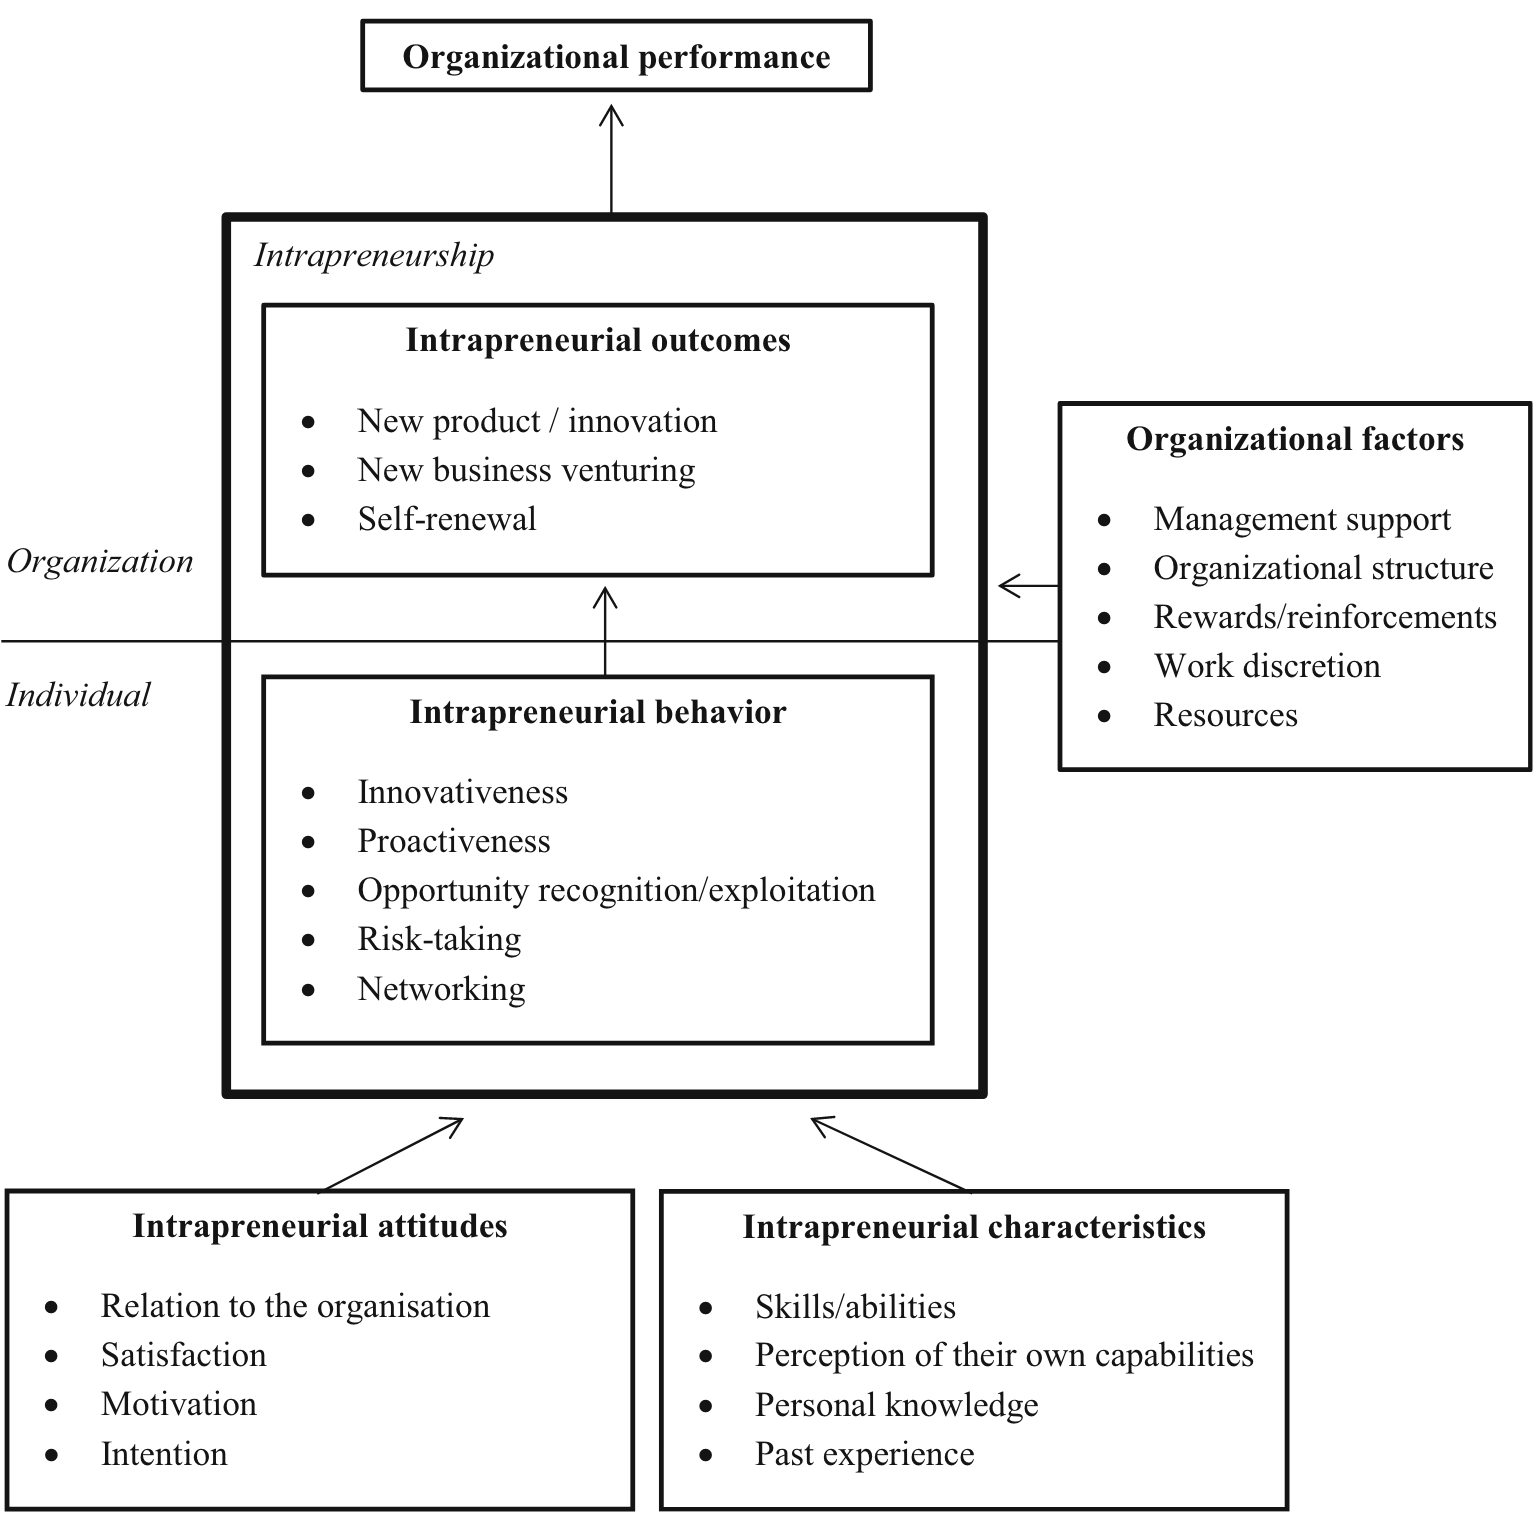 Intrapreneurship framework as developed by Neessen et al. (2019)